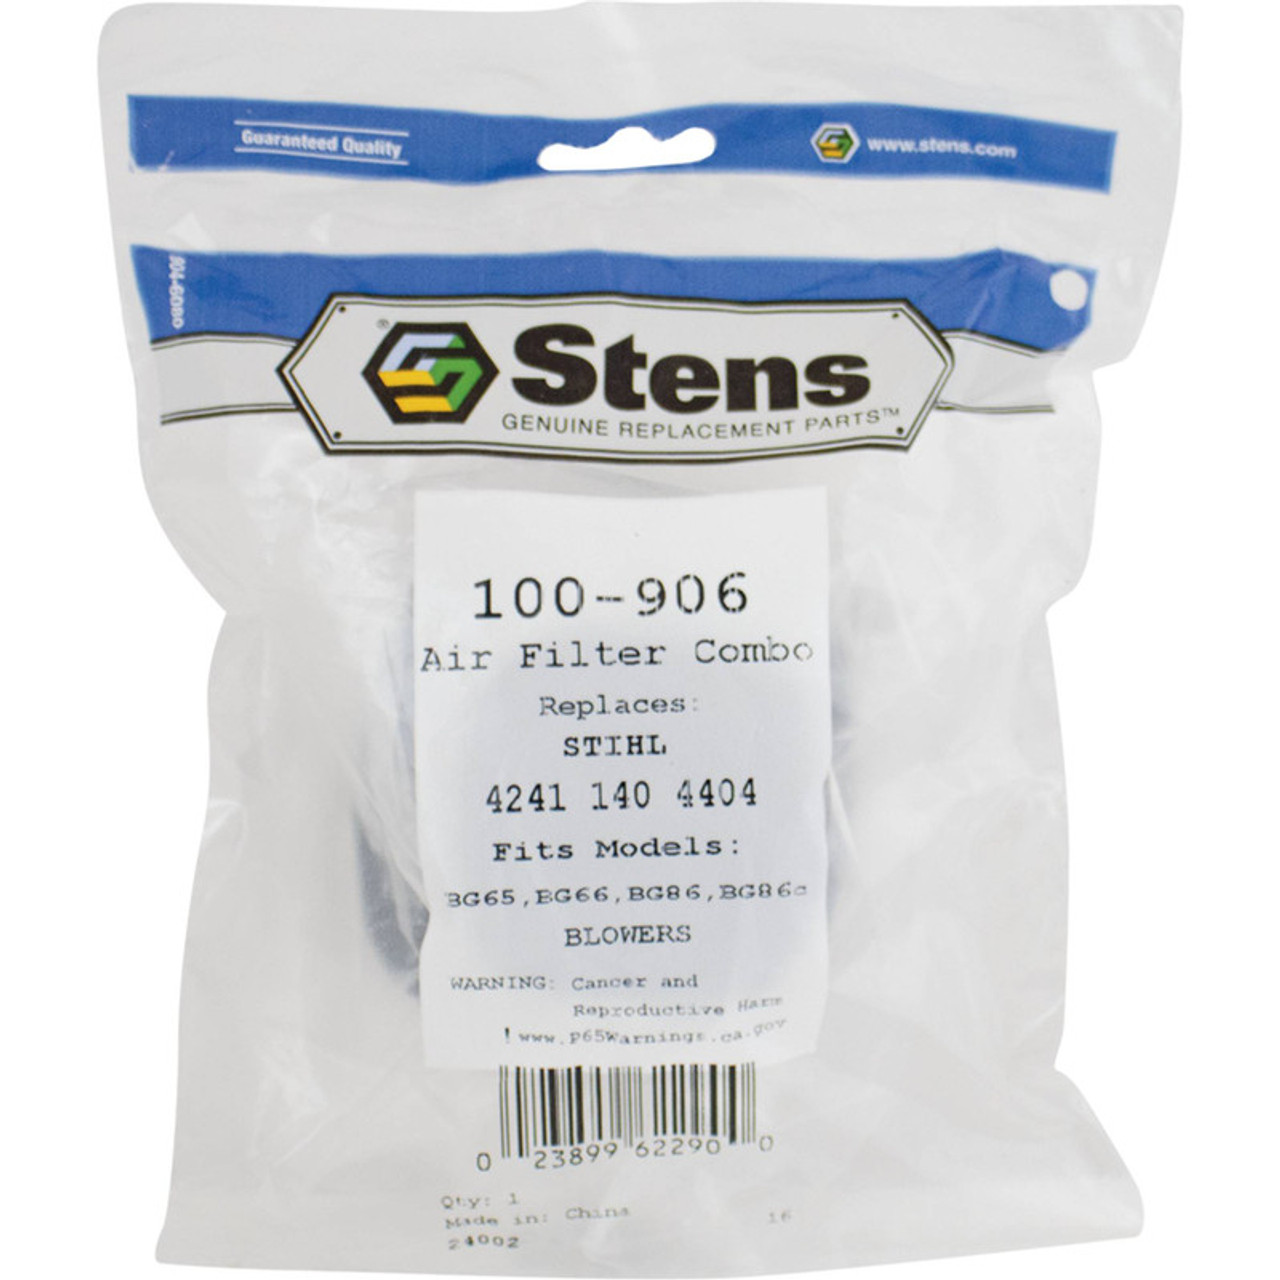 Stens 100-906 Stens Air Filter Alternate of Stihl 4241 140 4404